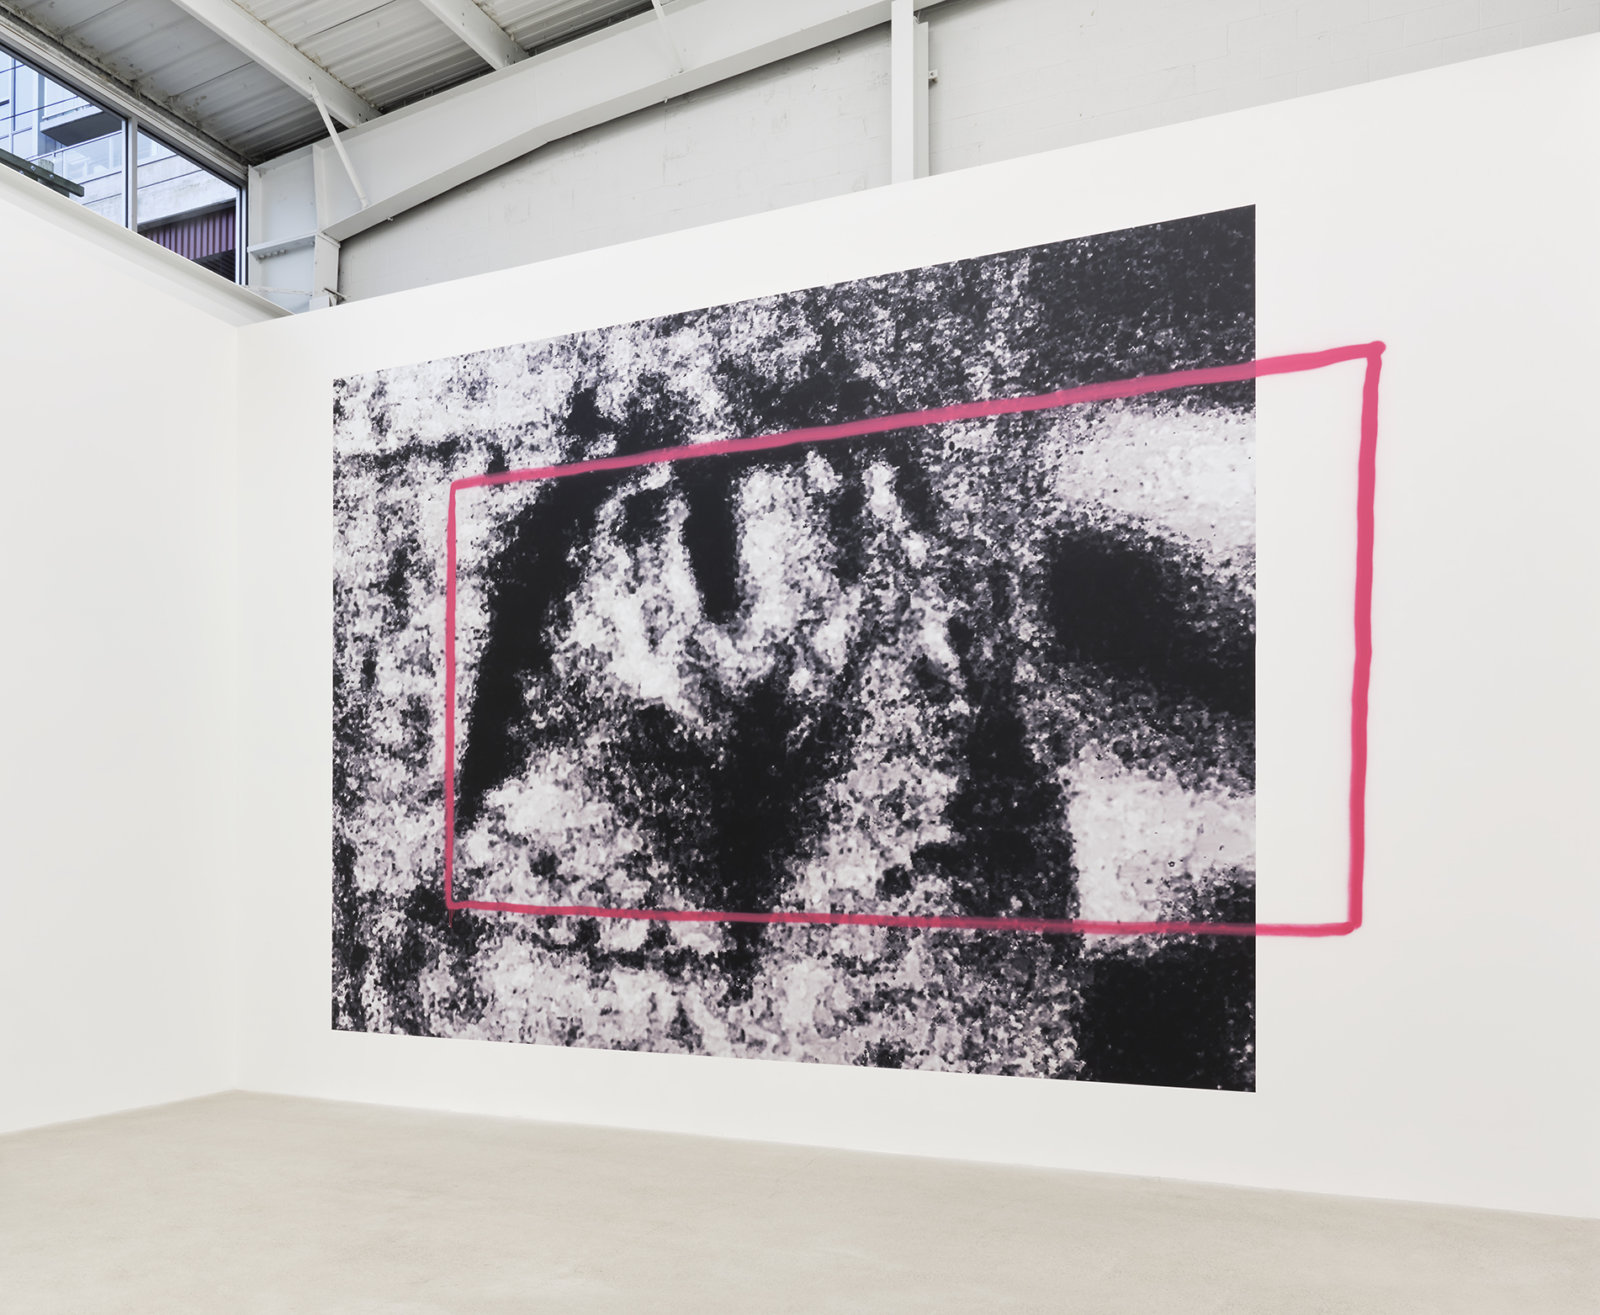 Duane Linklater, latealex, 2020, vinyl, spray paint, 182 x 261 in. (462 x 663 cm)